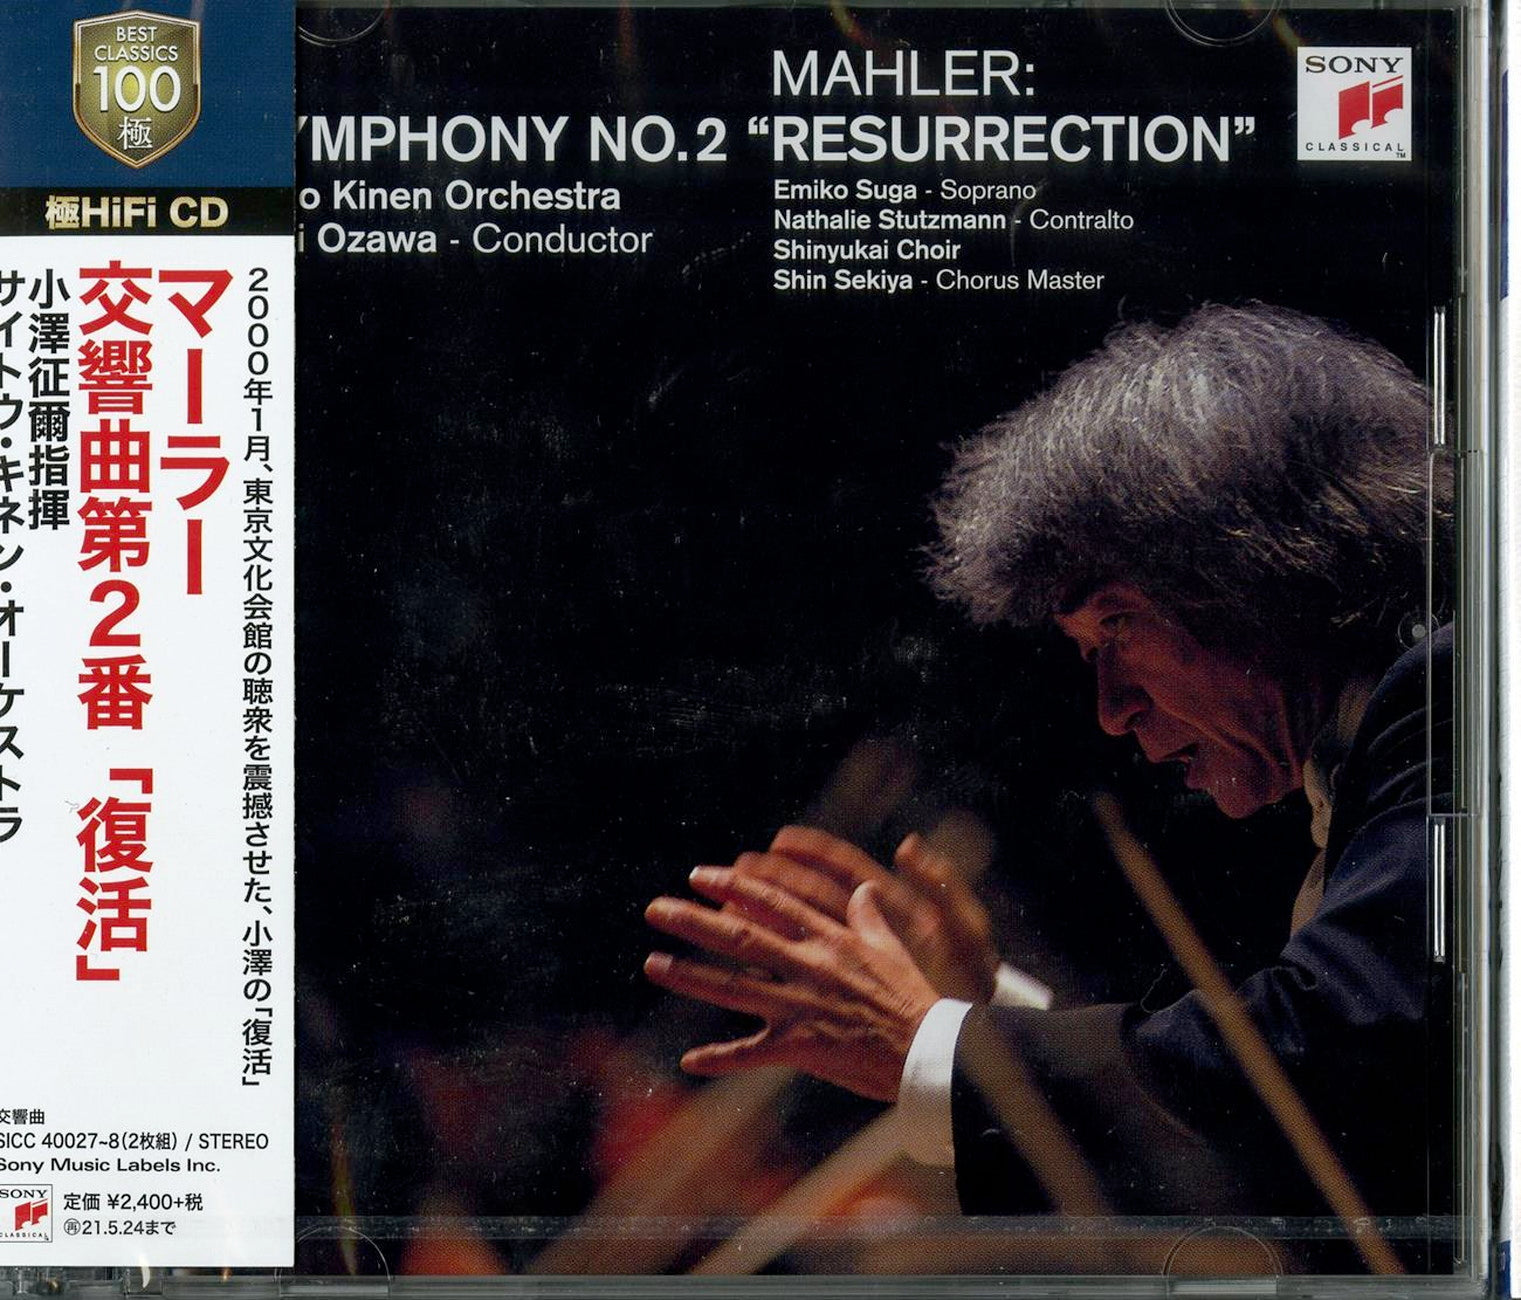 Seiji Ozawa - Mahler: Symphony No. 2 Ressurection - Japan 2 HiFiCD